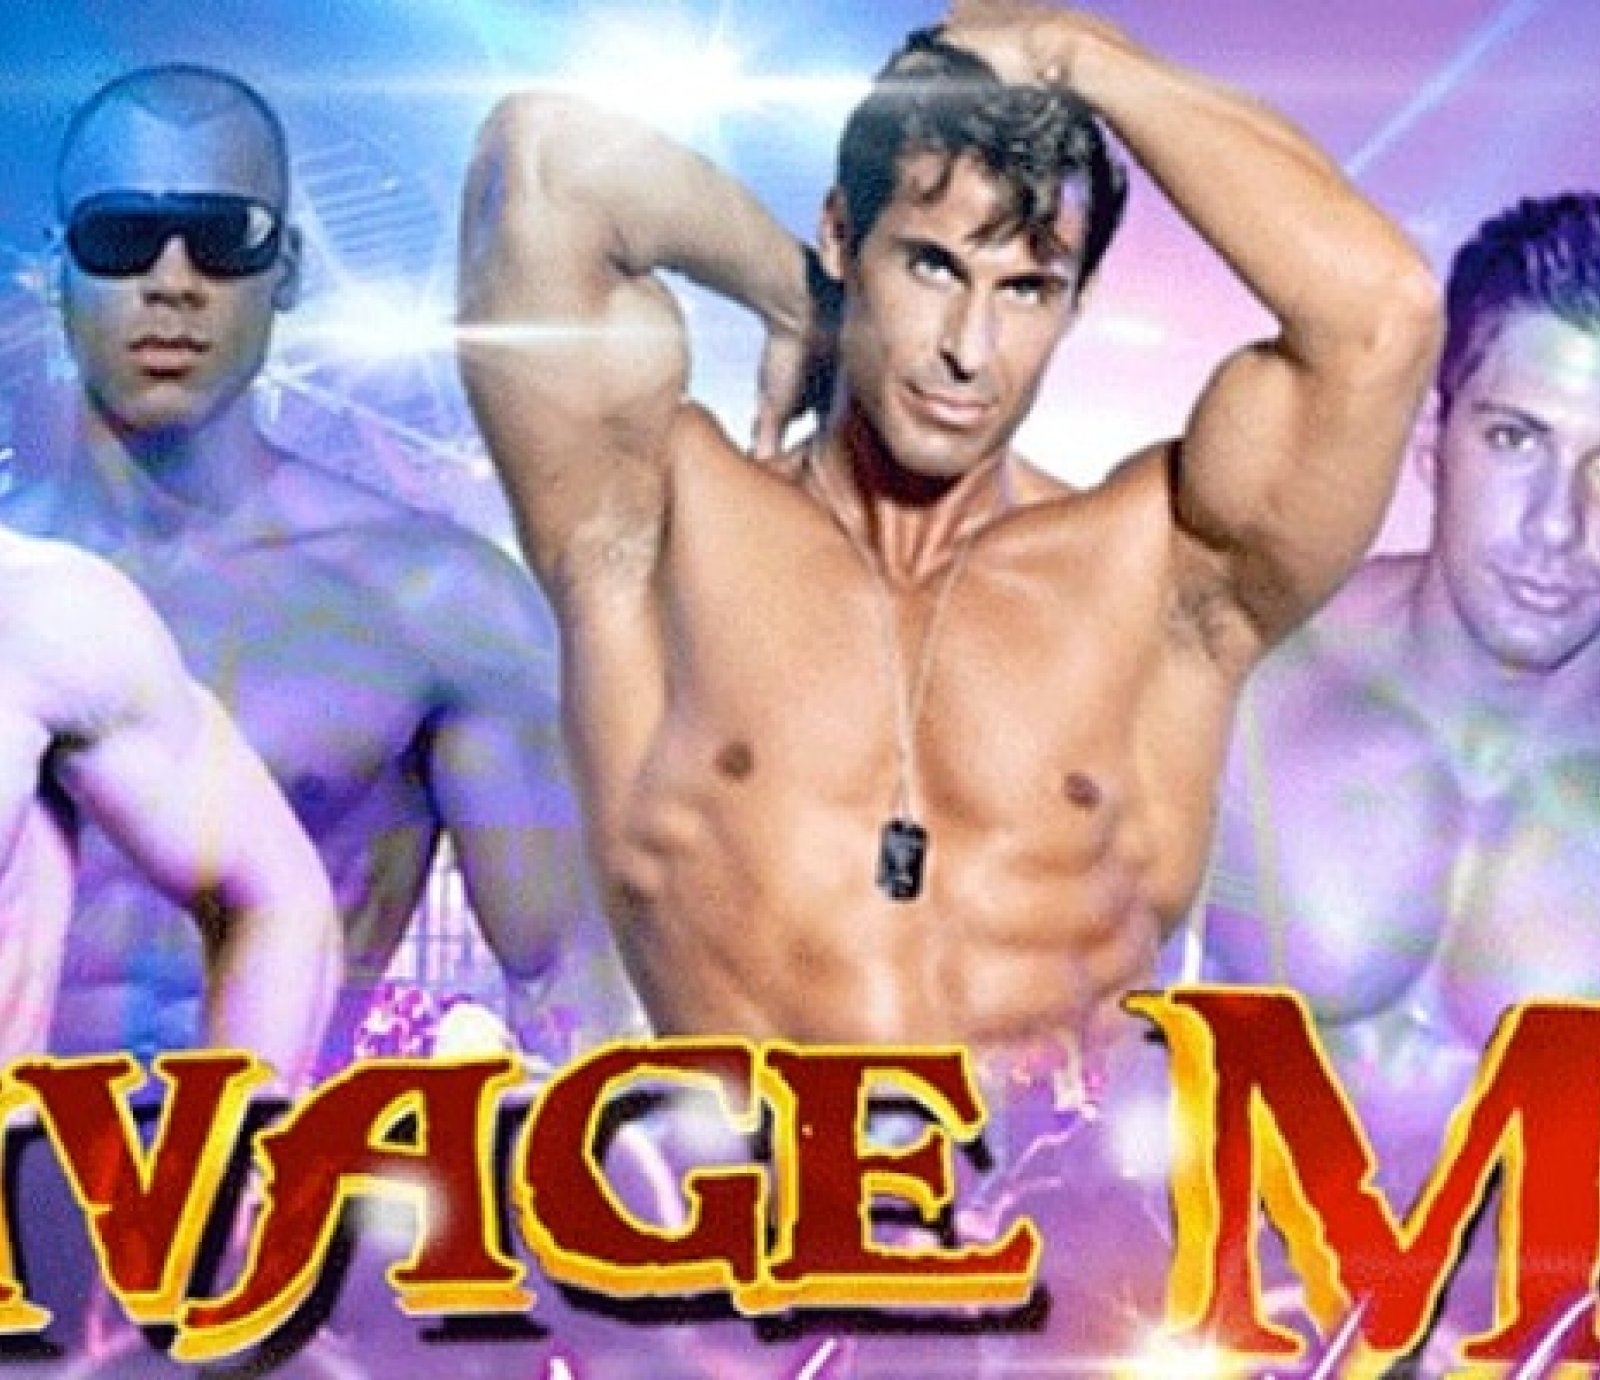 Savage Men Male Revue - Los Angeles